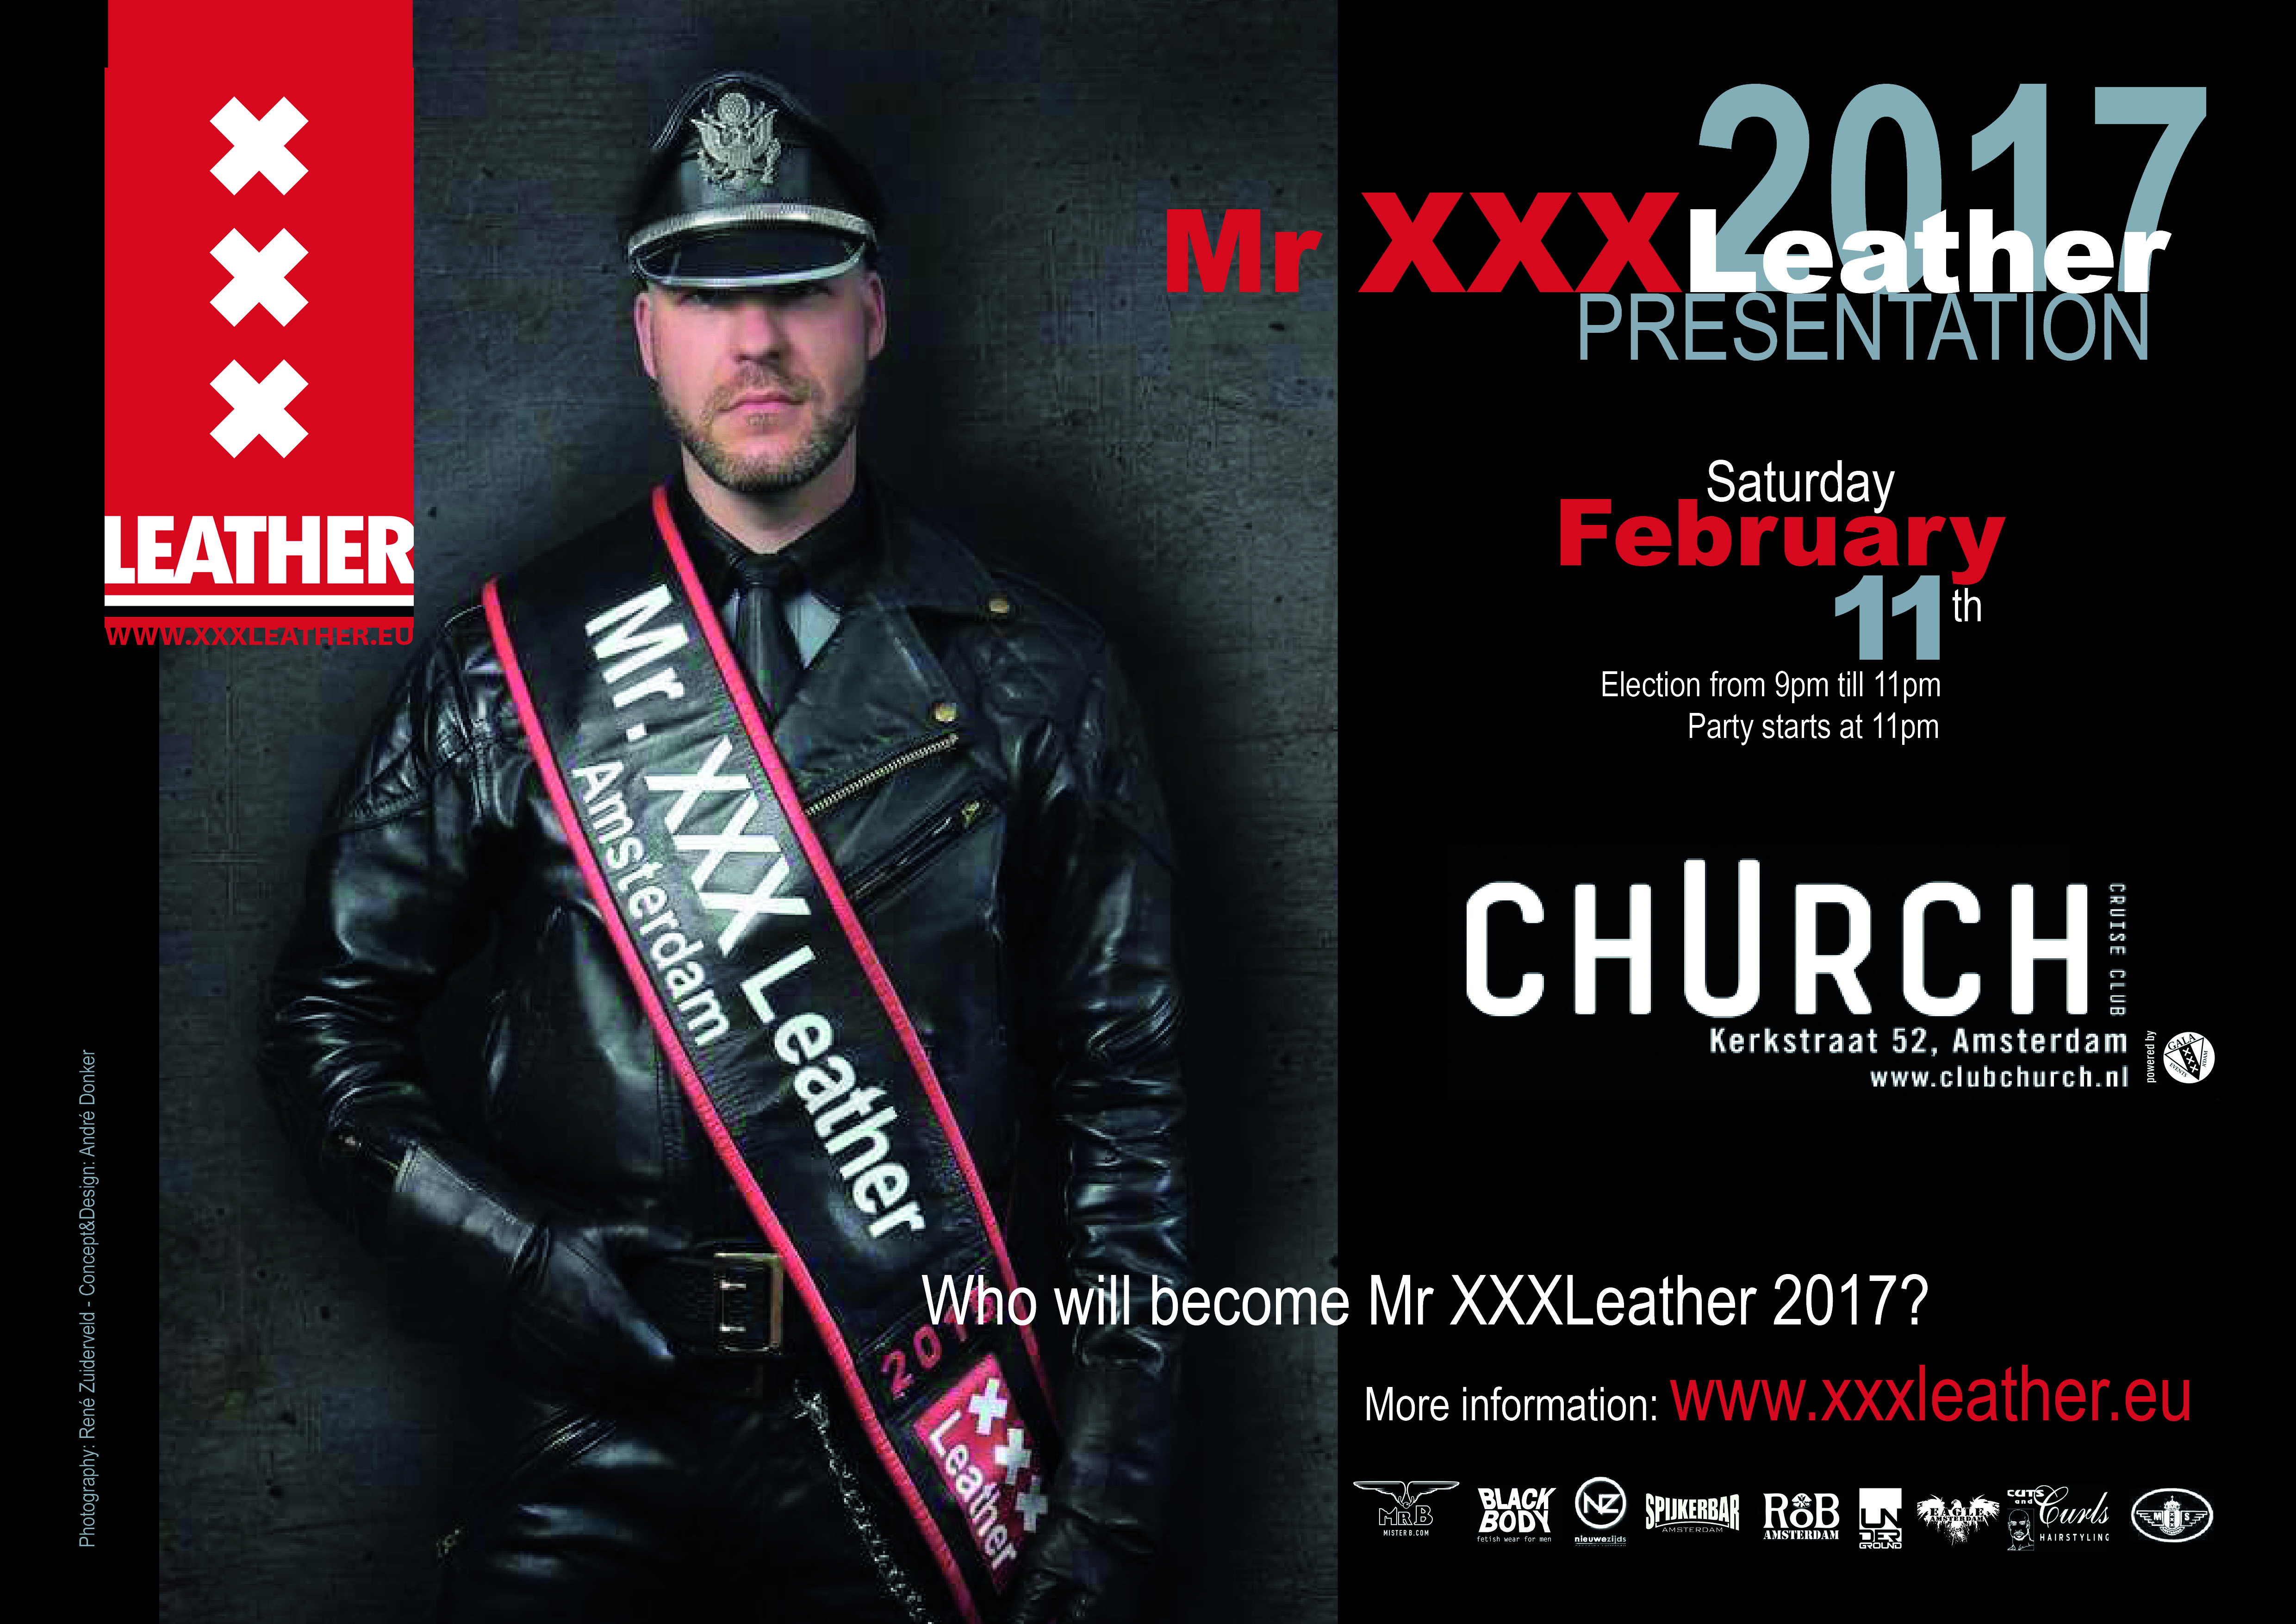 Flyer Mr XXXL 2017 presentation logo's print